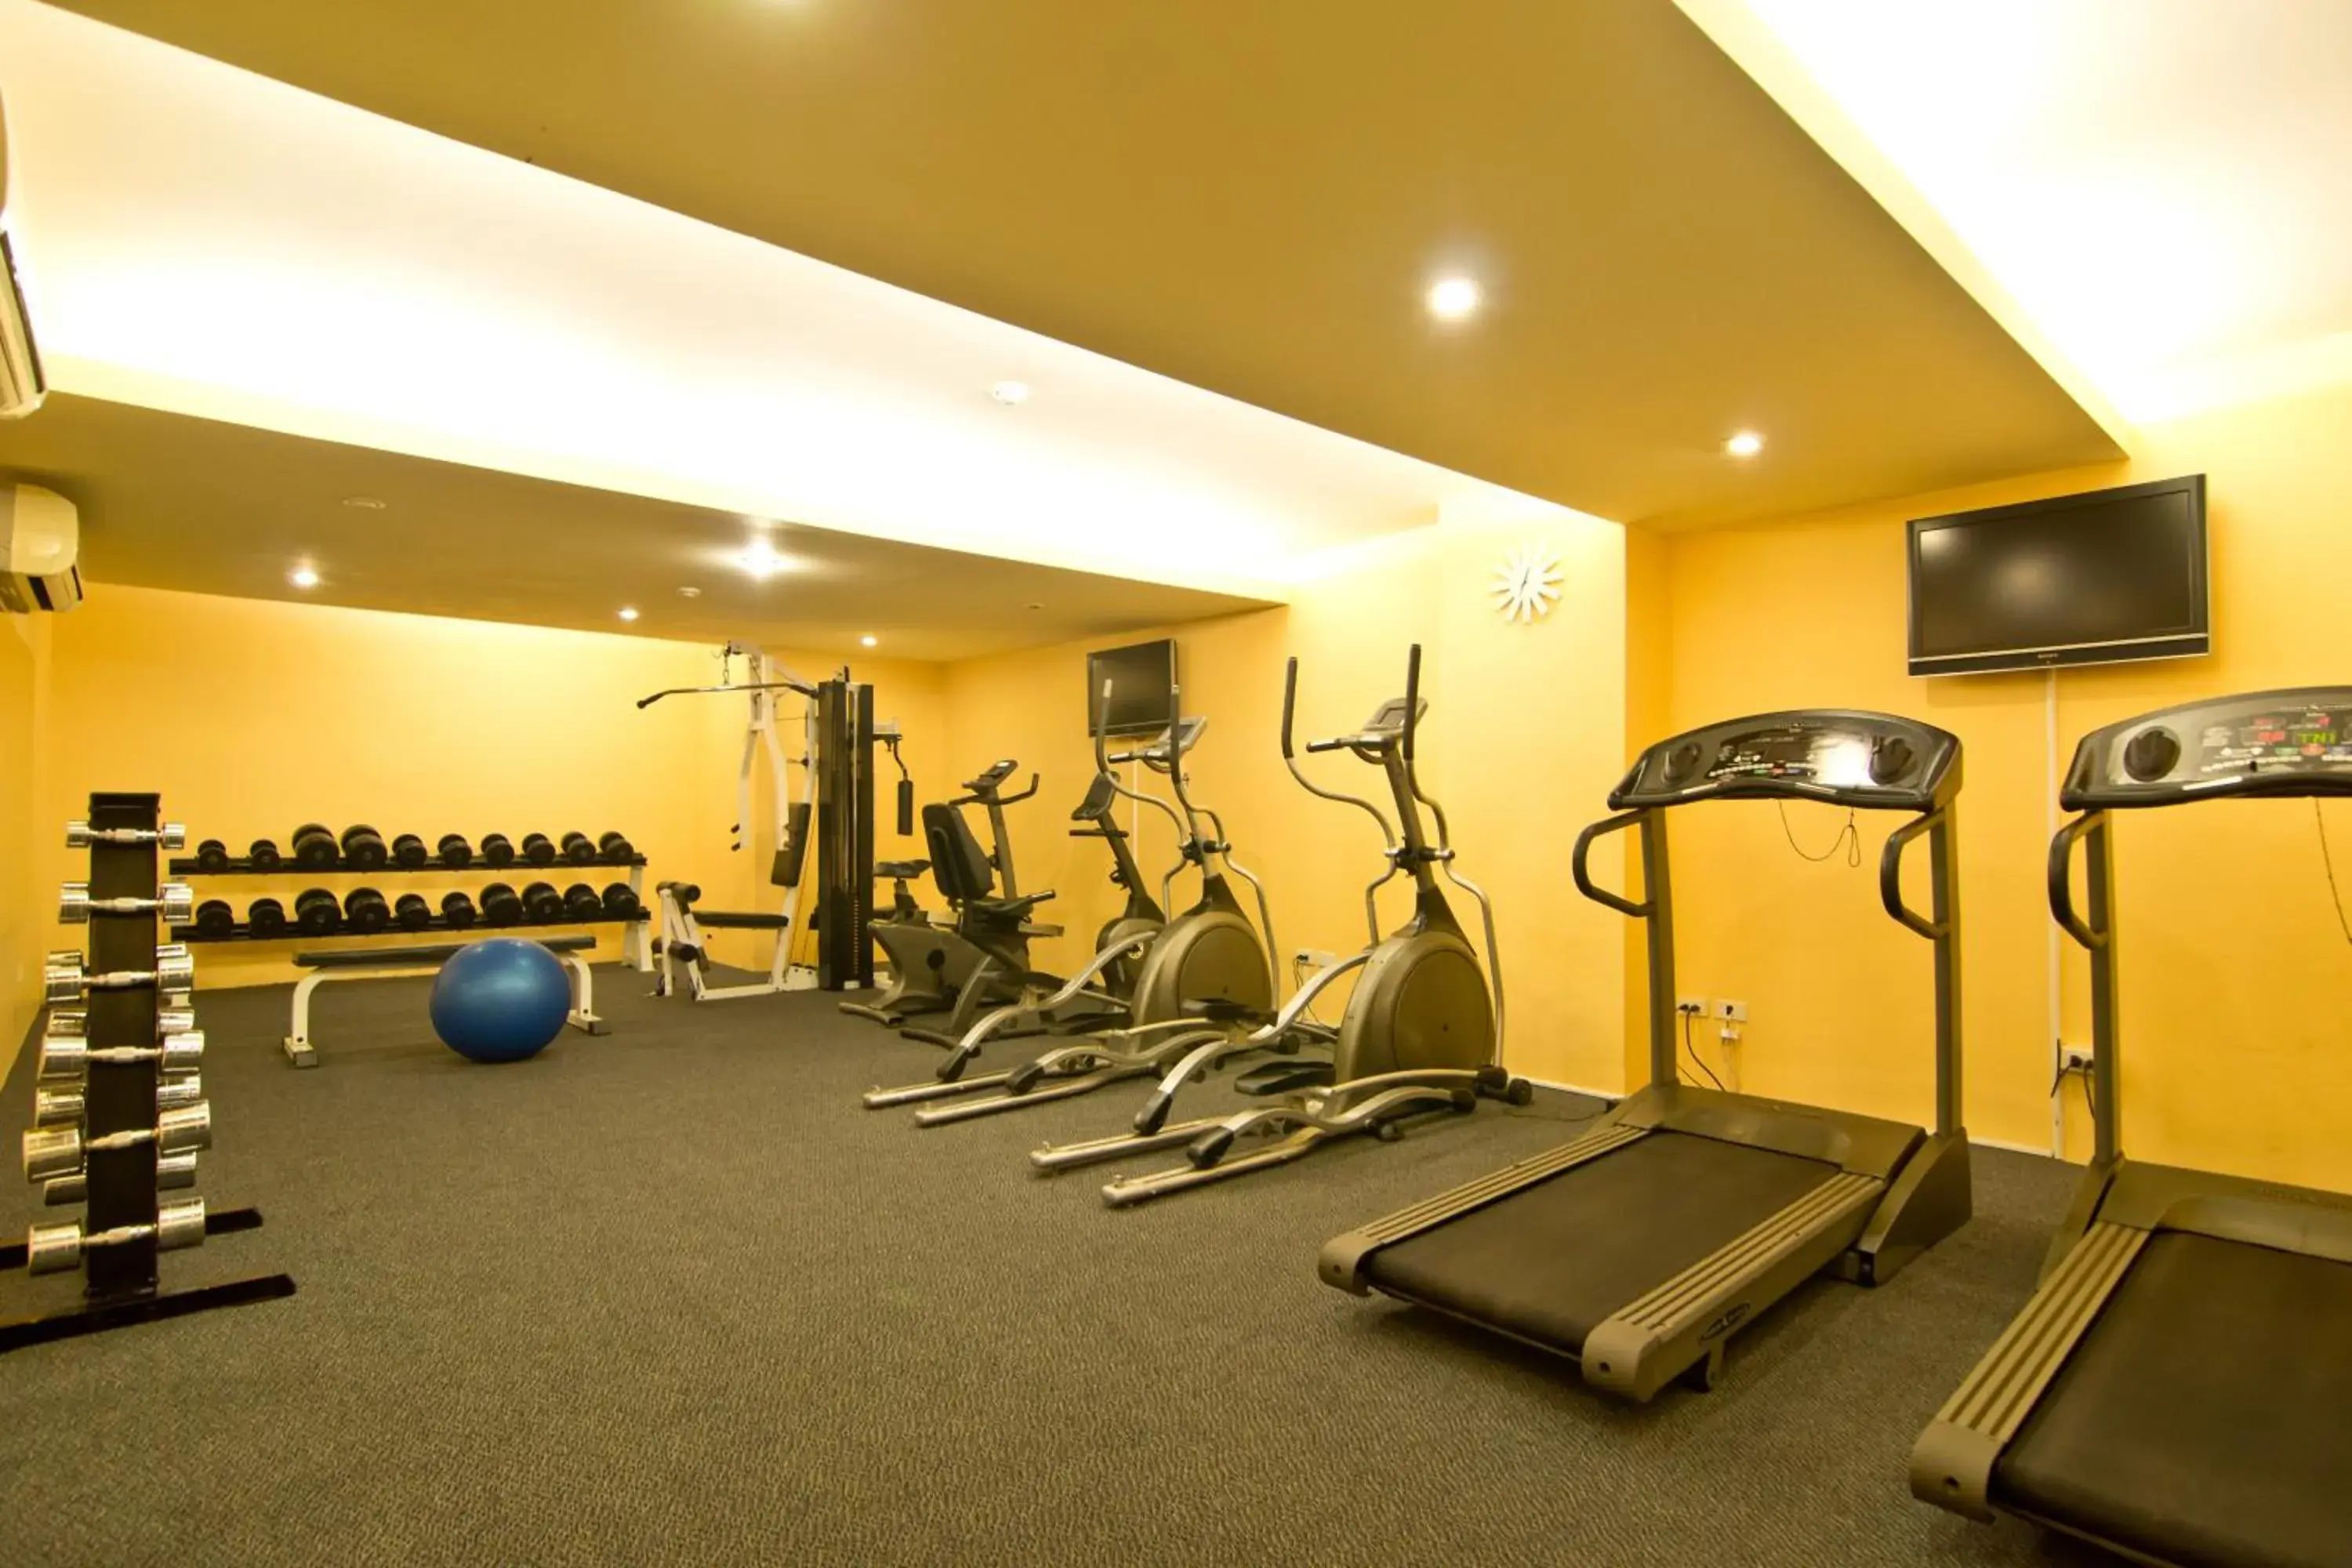 Fitness centre/facilities, Fitness Center/Facilities in Best Bella Pattaya